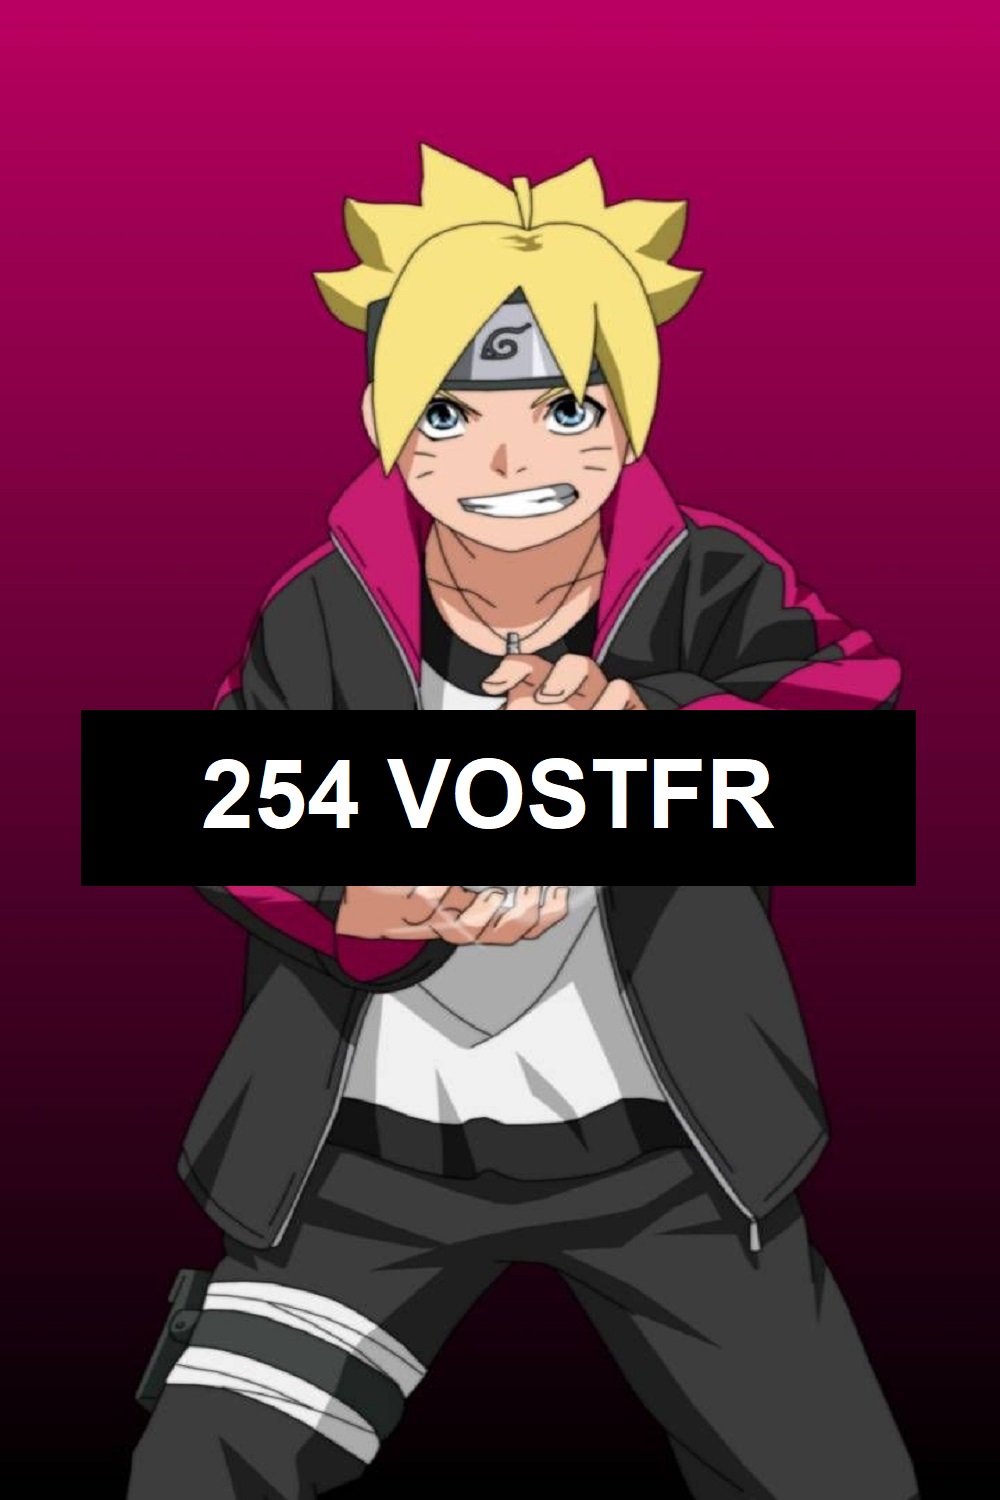 Univers Anime Boruto Naruto Next Generations 254 Vostfr T Co 3mcsipncqs T Co Zodmans674 Twitter